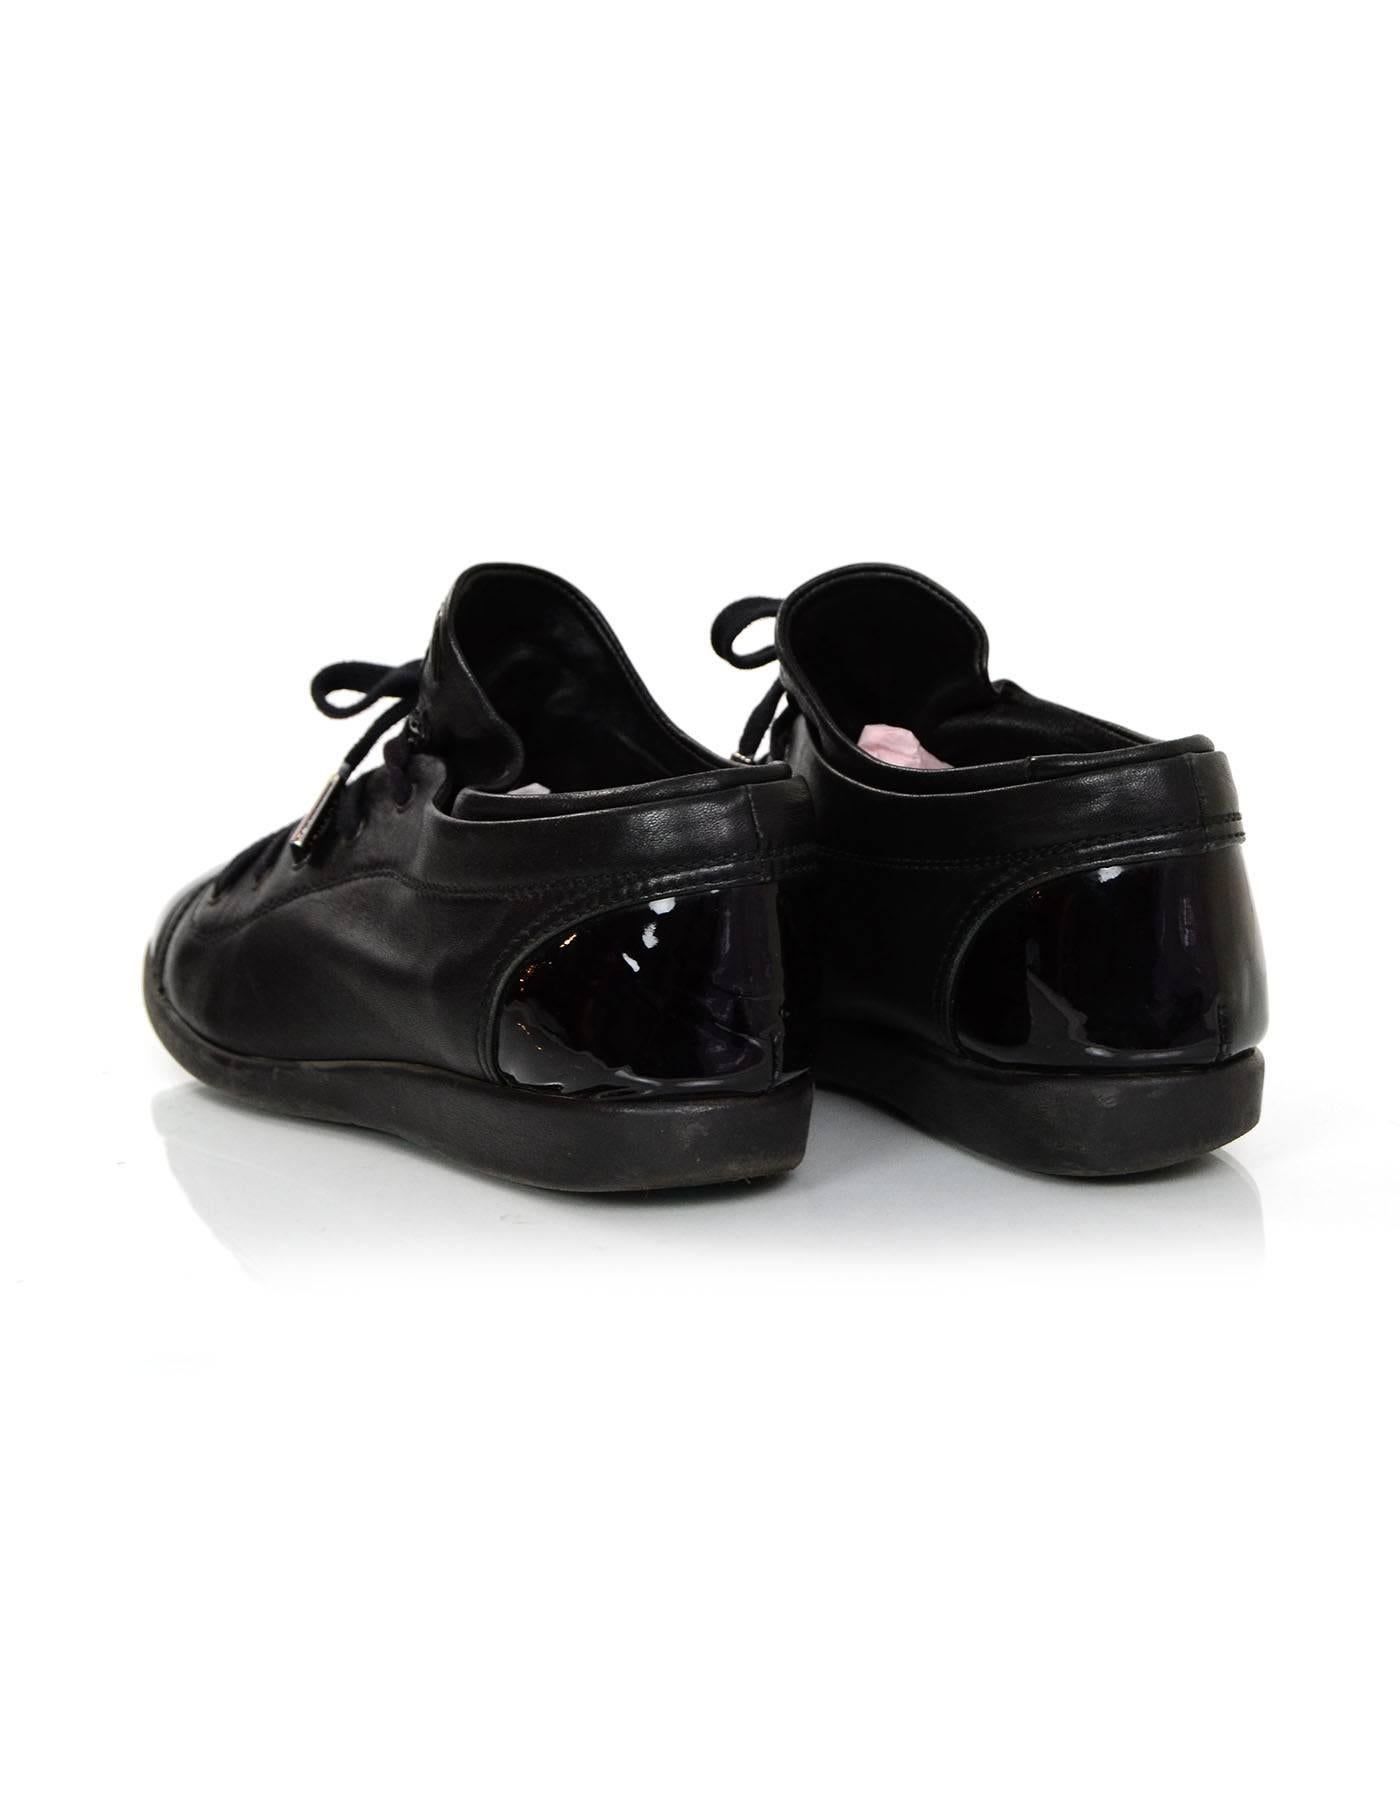 Chanel Black Leather CC Sneakers sz 38 w/DB 1